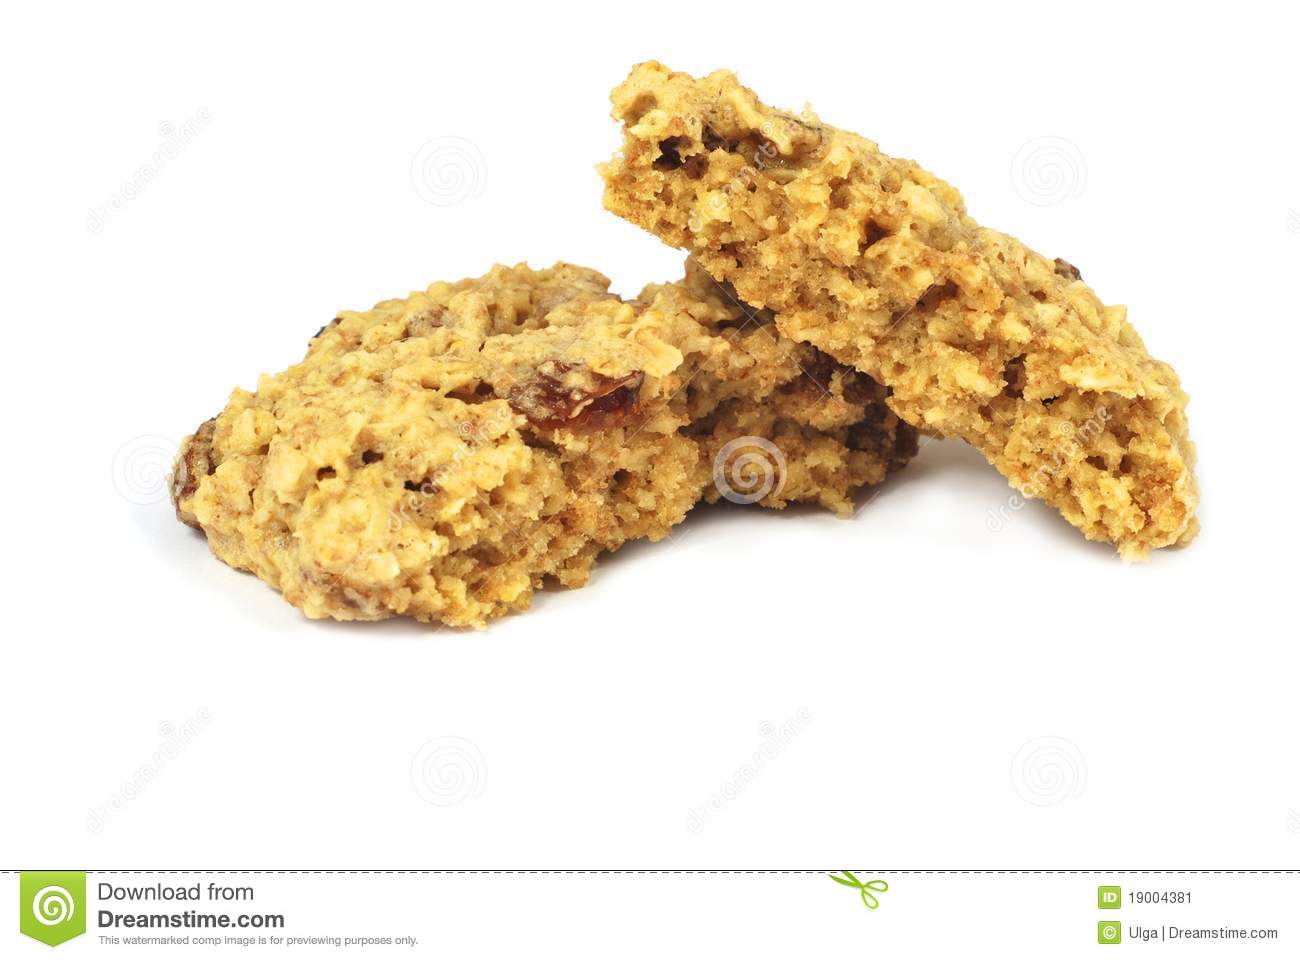 Oatmeal Raisin Cookie Stock Image   Image  19004381